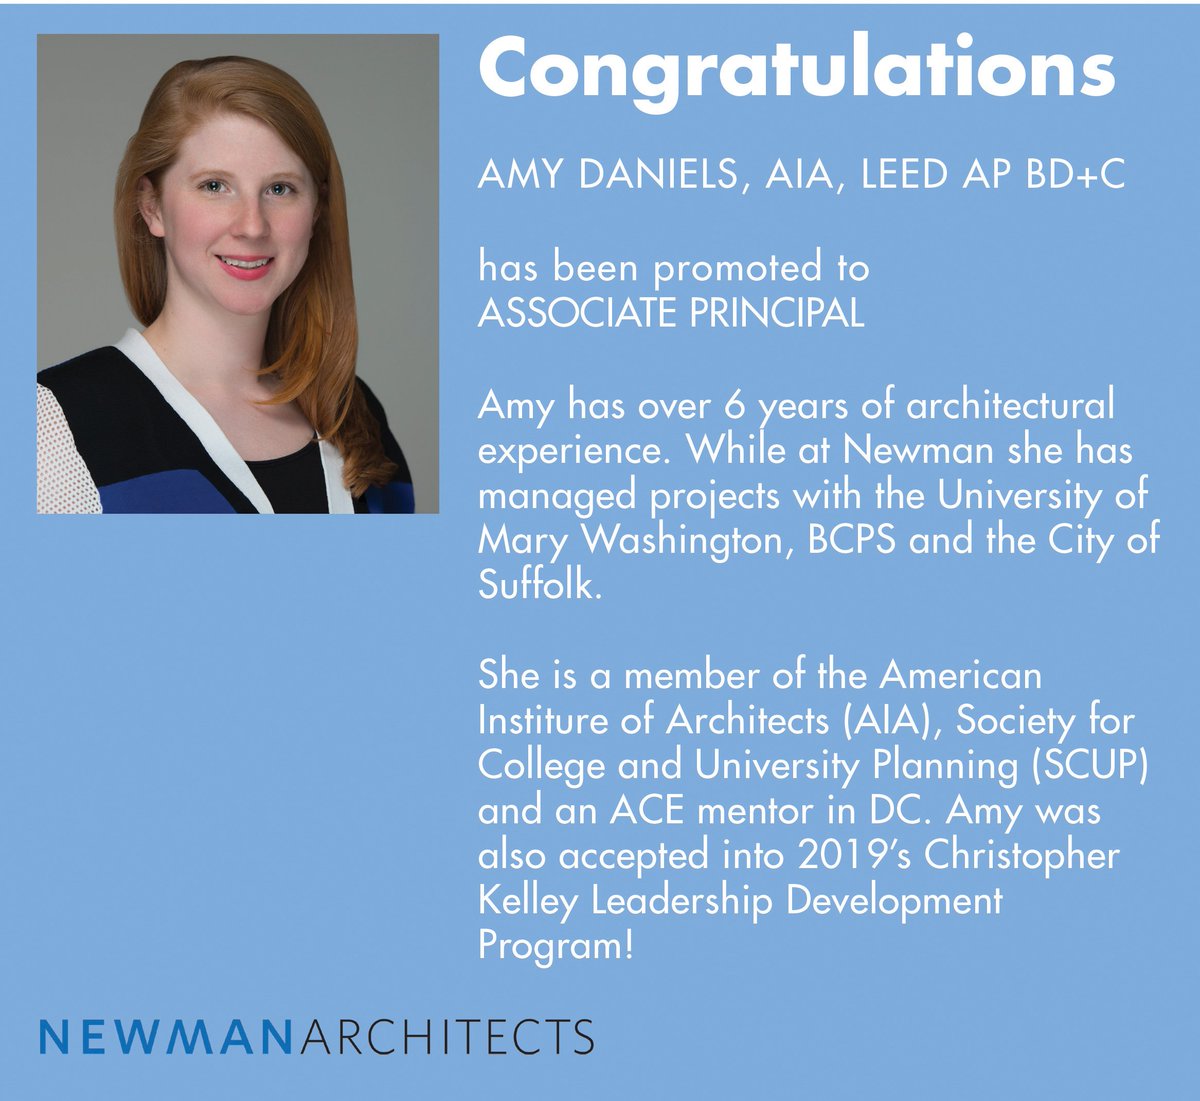 Congratulations @amyx28! #architecture @employeenews @promotions